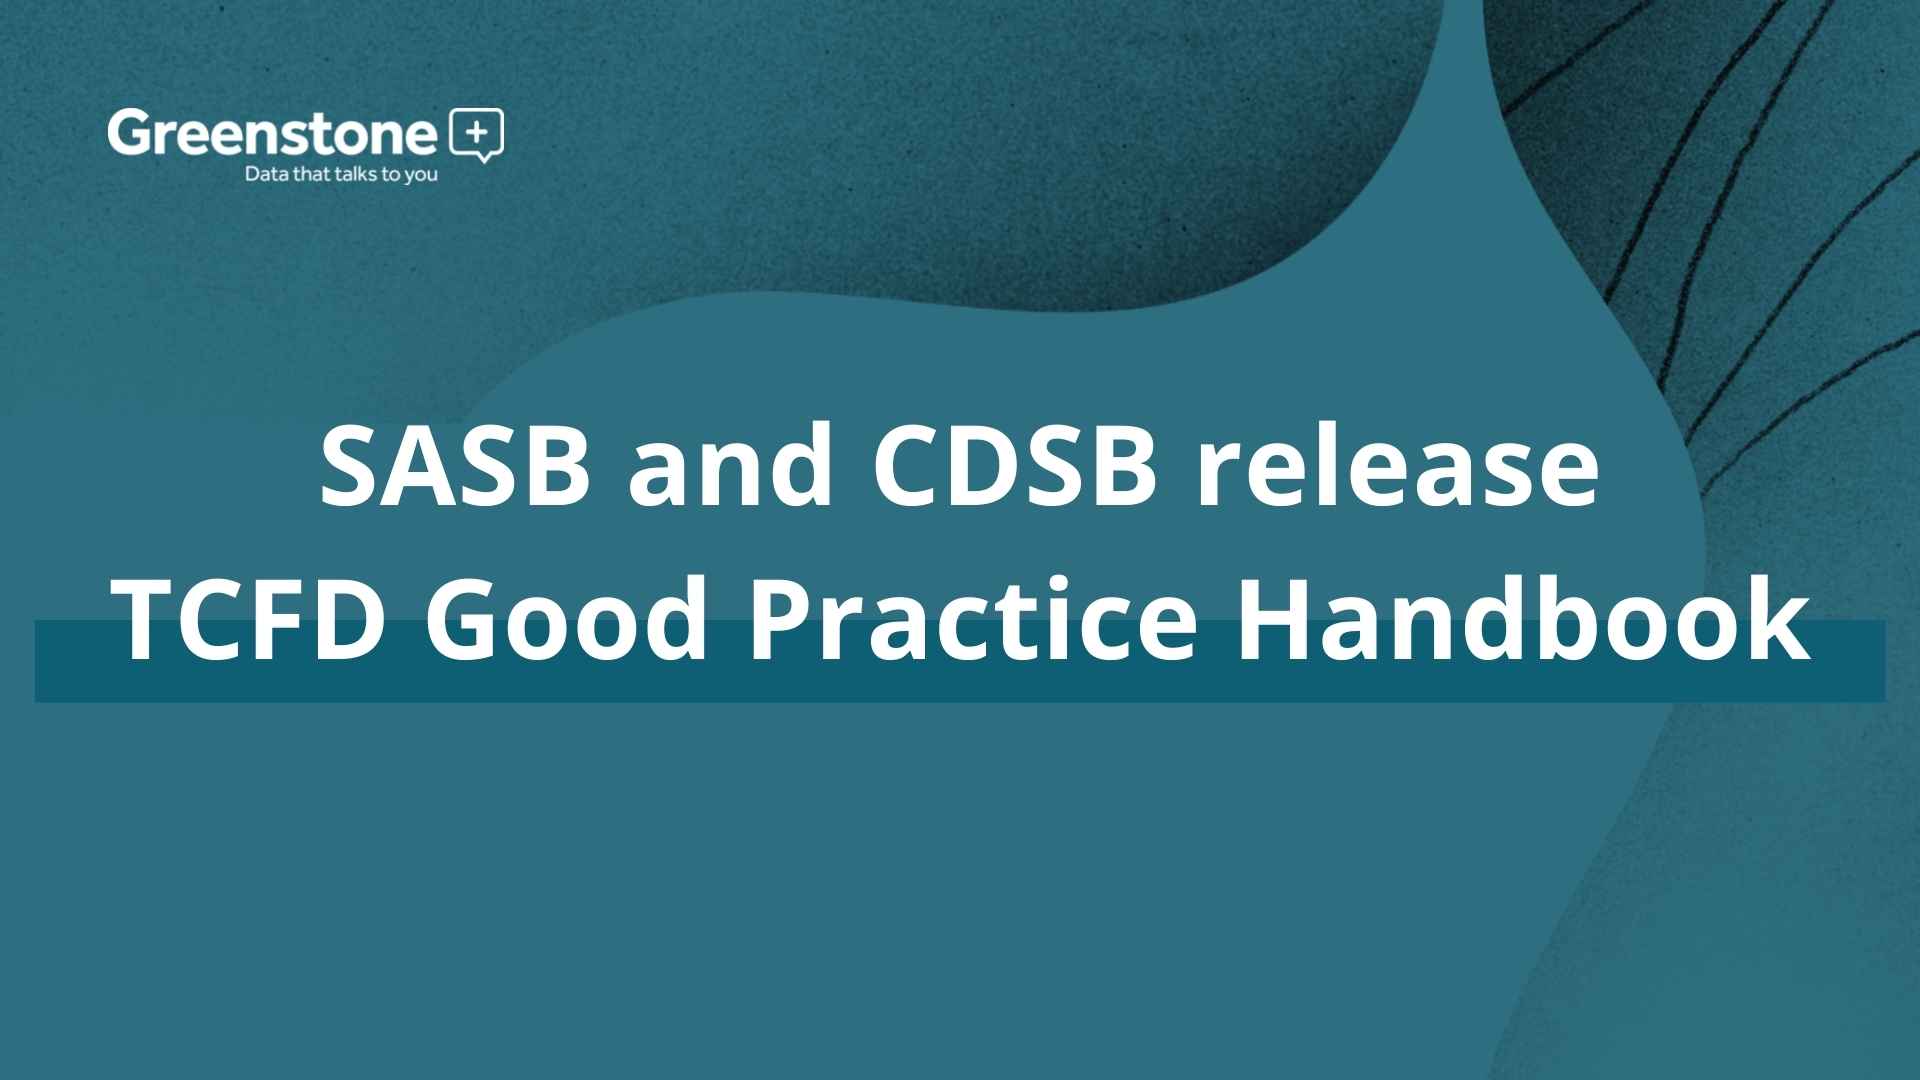 SASB and CDSB release TCFD Good Practice Handbook